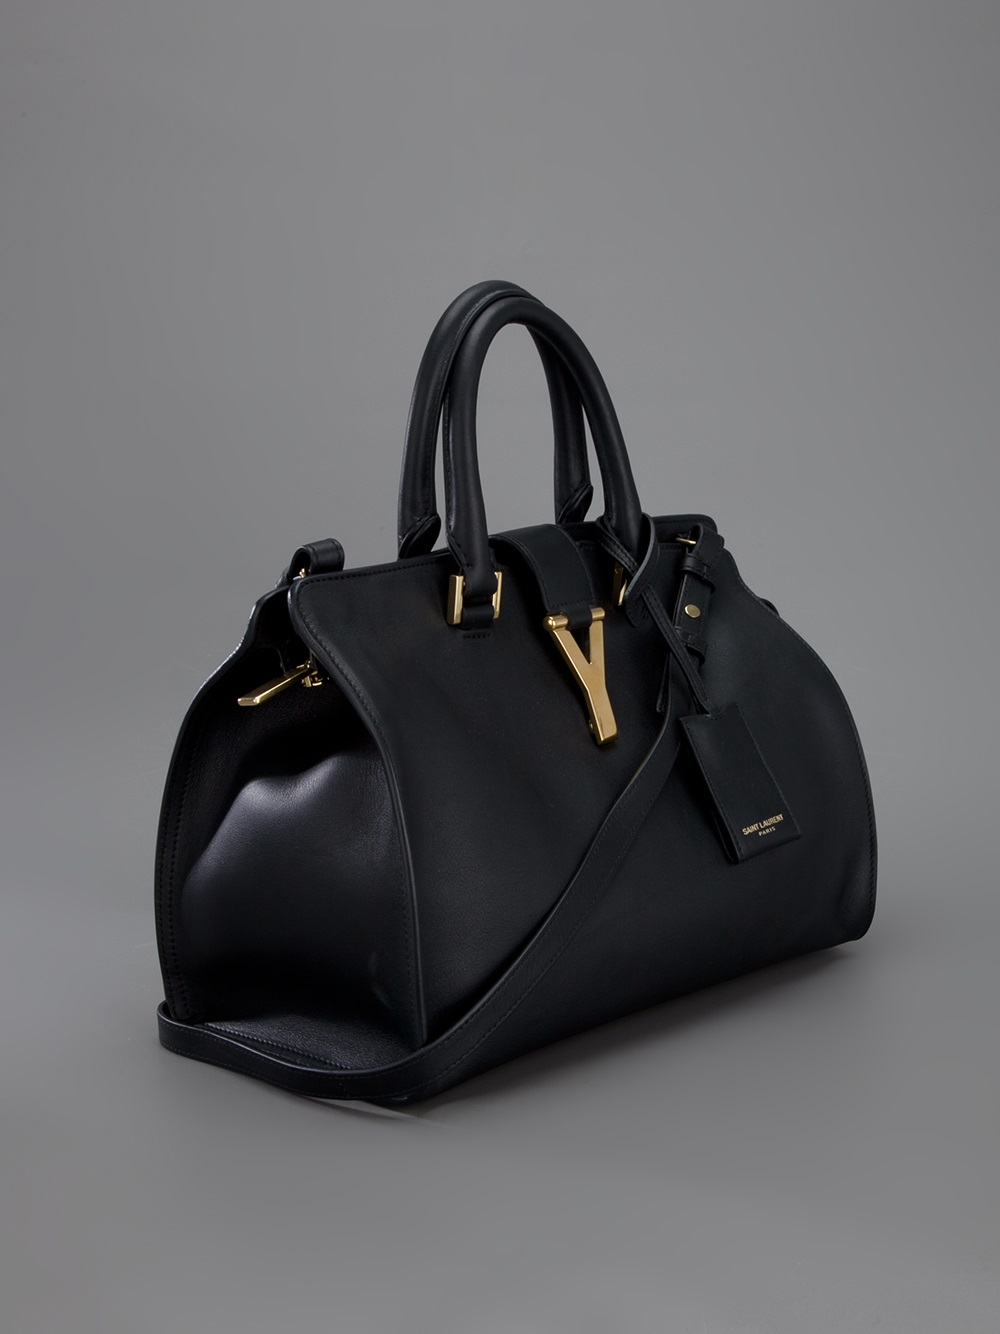 Saint Laurent Small Cabas Bag in Black | Lyst